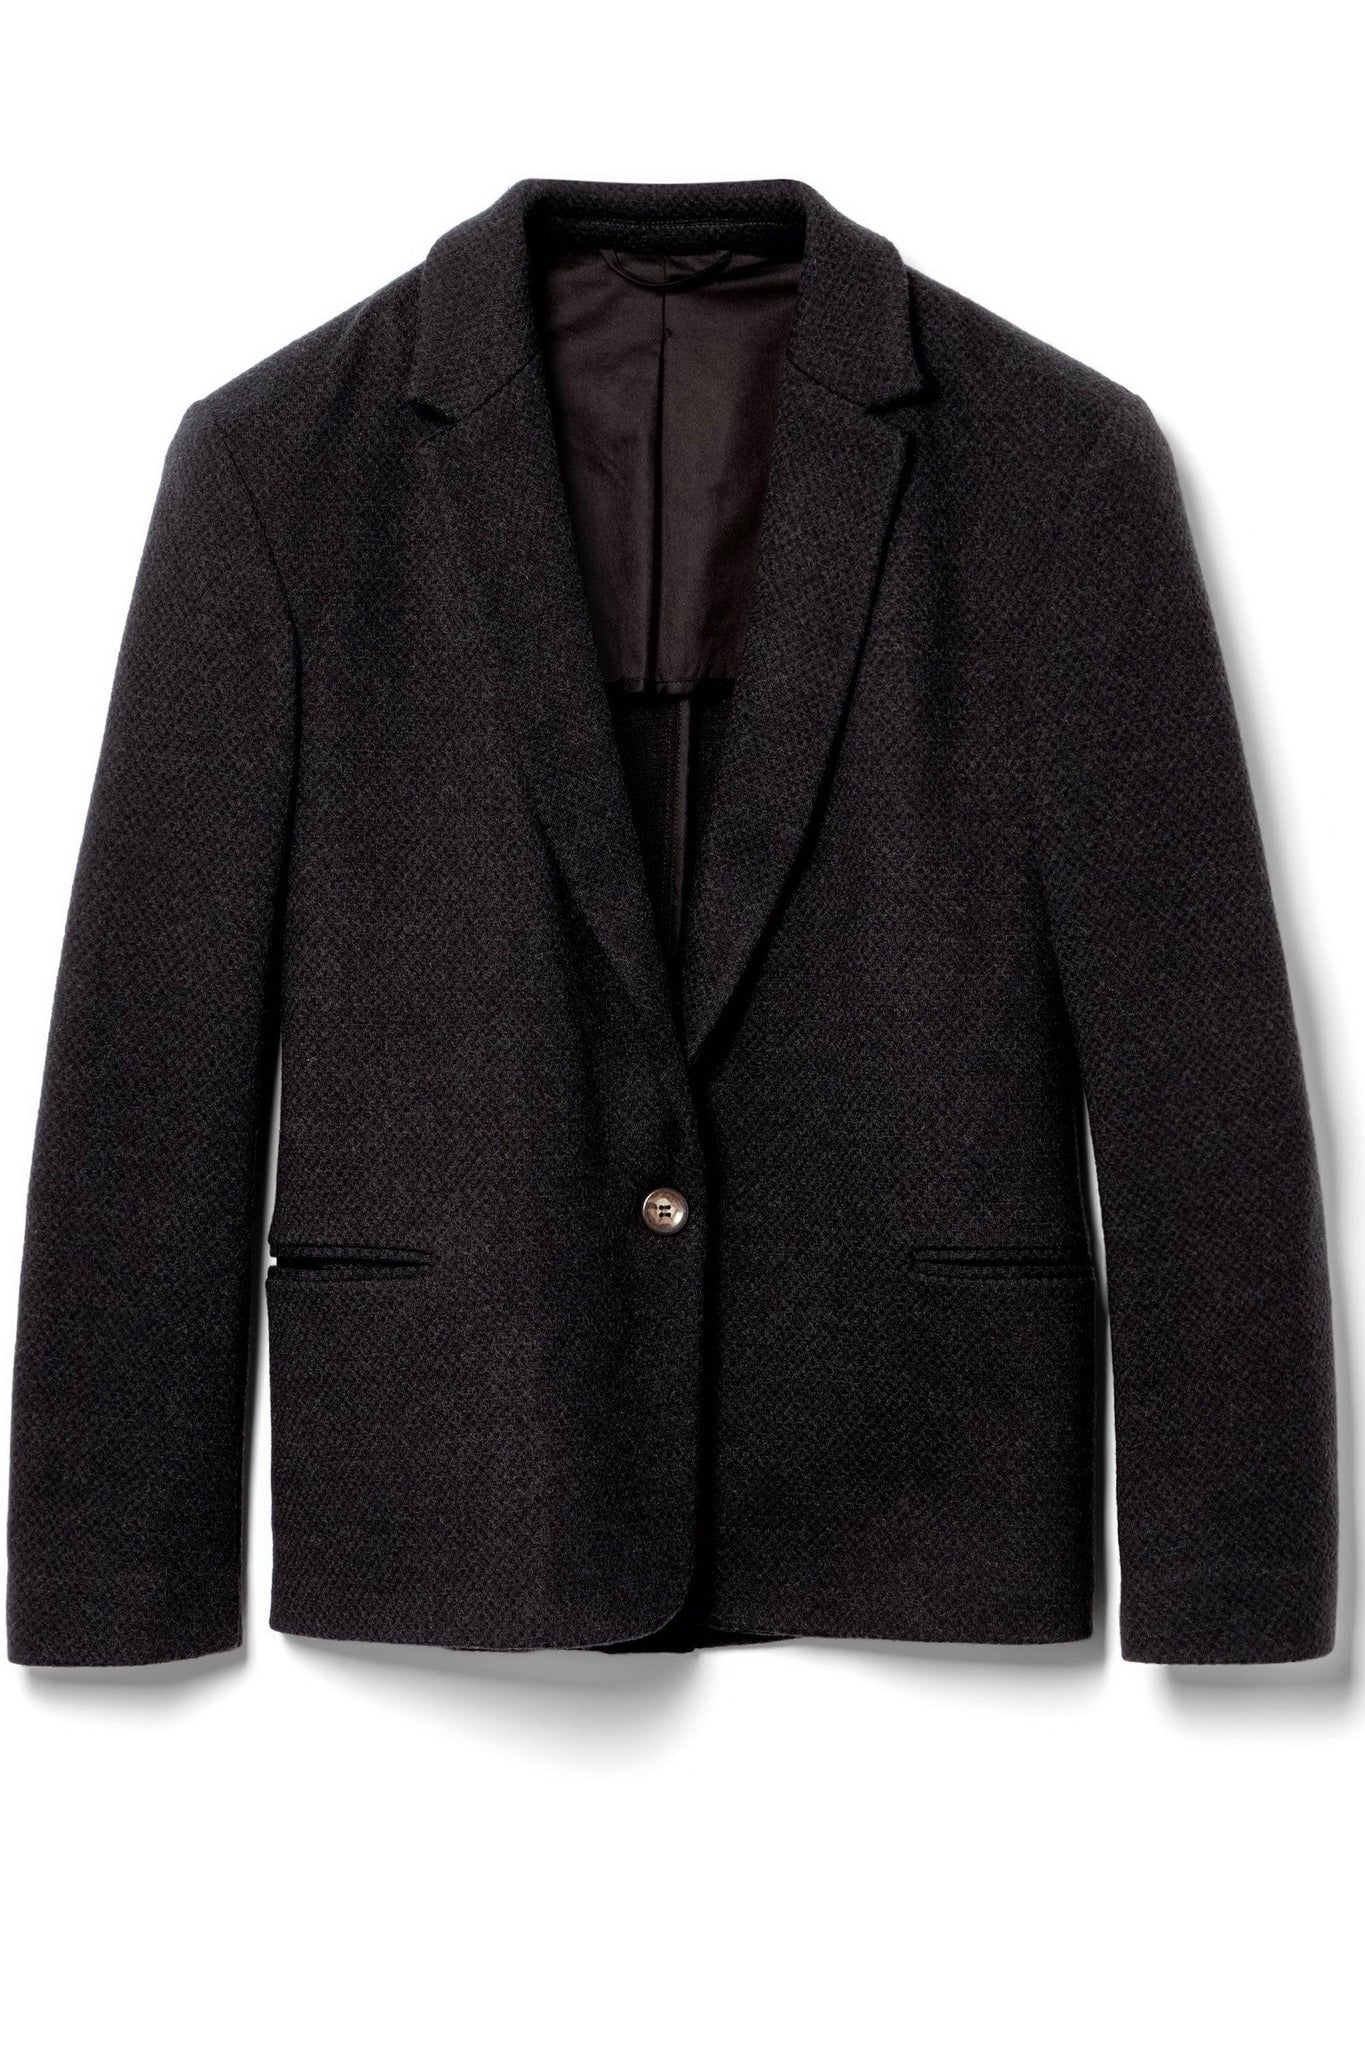 THE Blazer in organic cotton & rws merino by 4 in #blazer